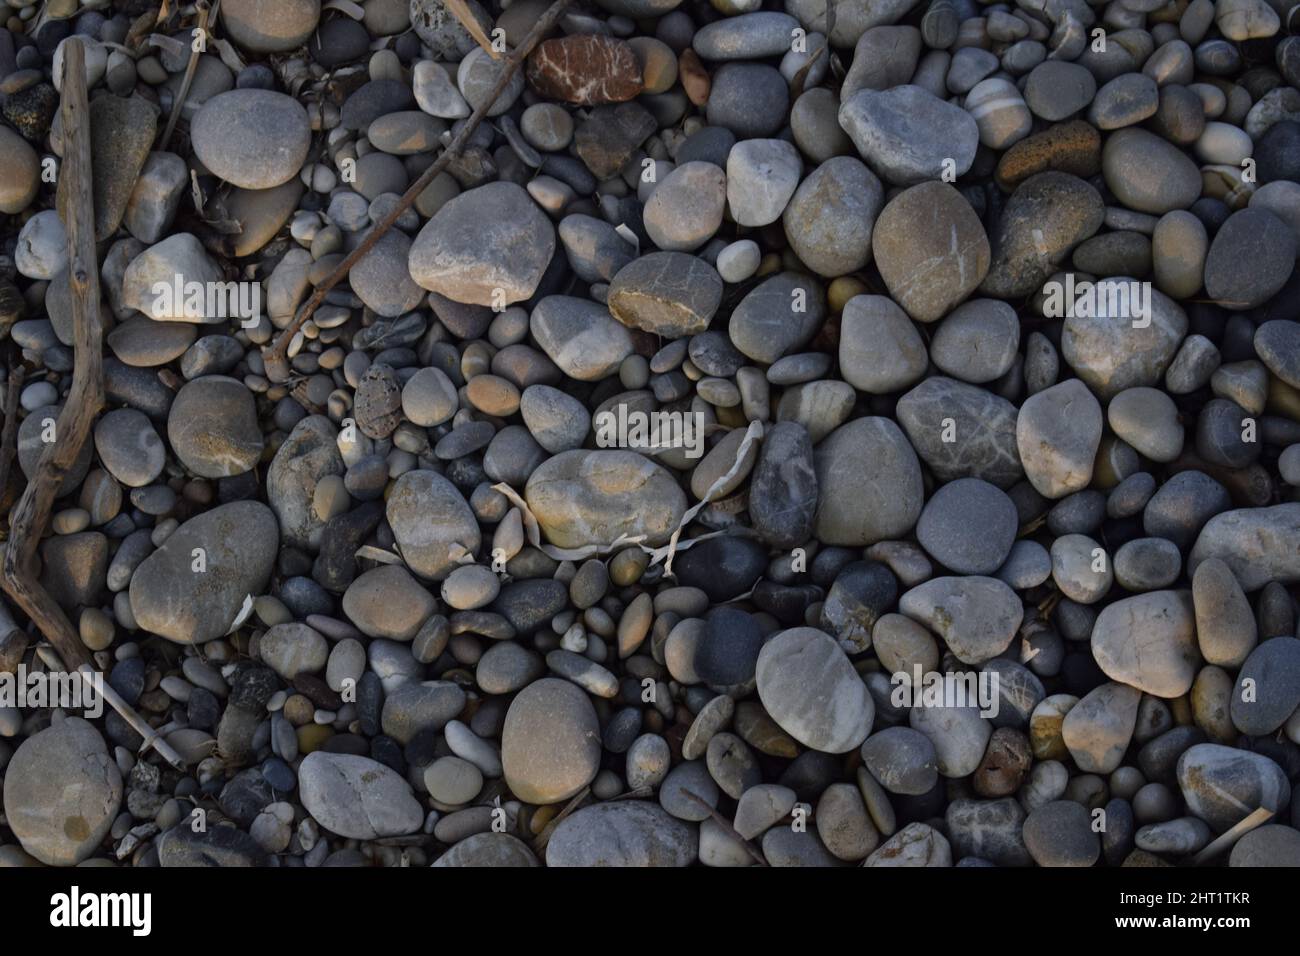 Closeup shot of a stack of pebbles Stock Photo